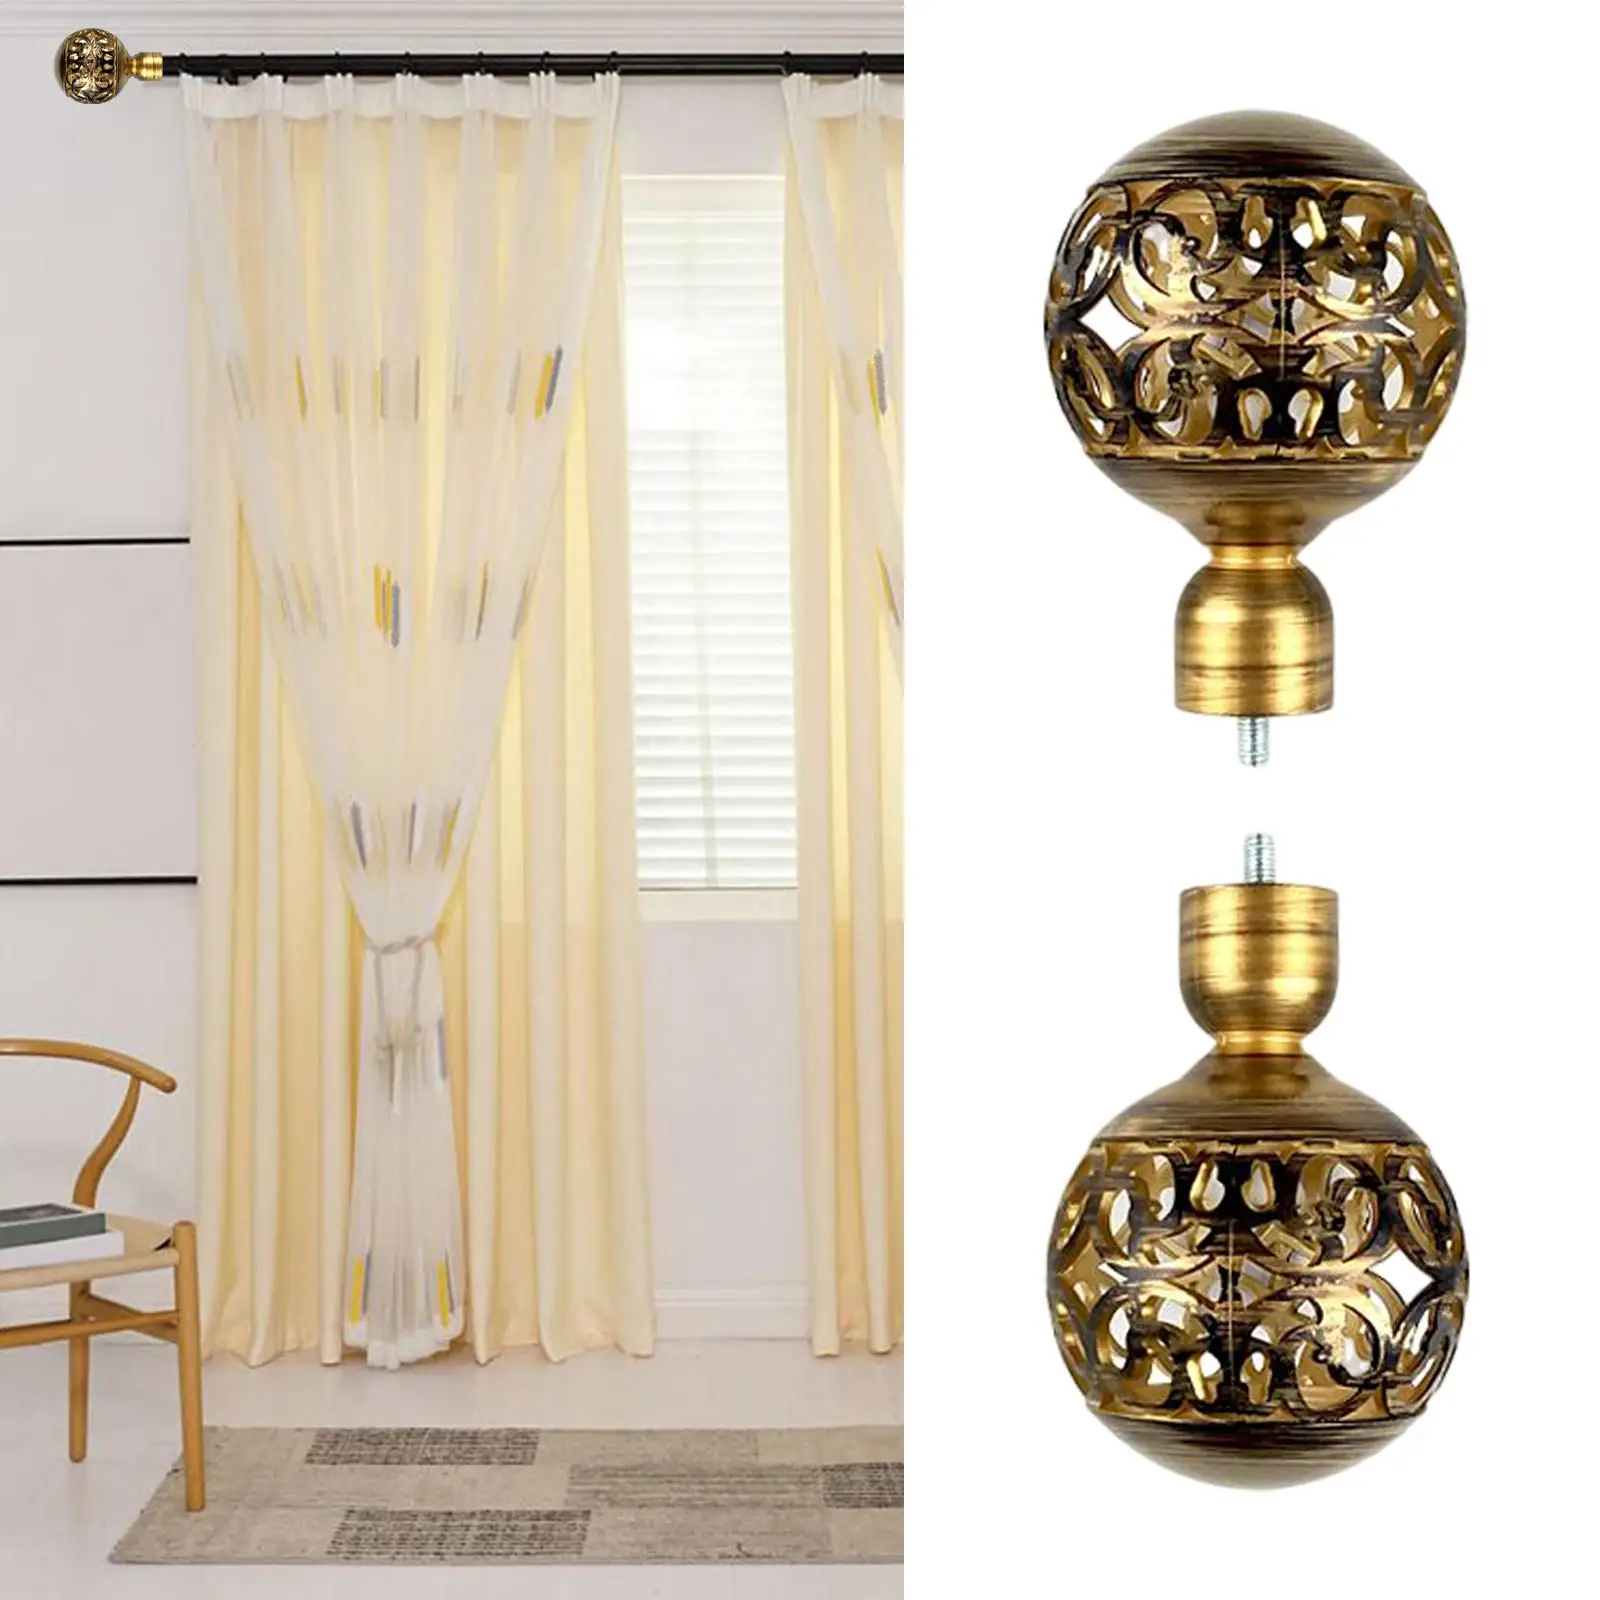 2x Hollow Curtain Rod Finials 3/4 inch Diameter Hardware Decorative Vintage Drapery Rod Finials for Living Room Bathroom